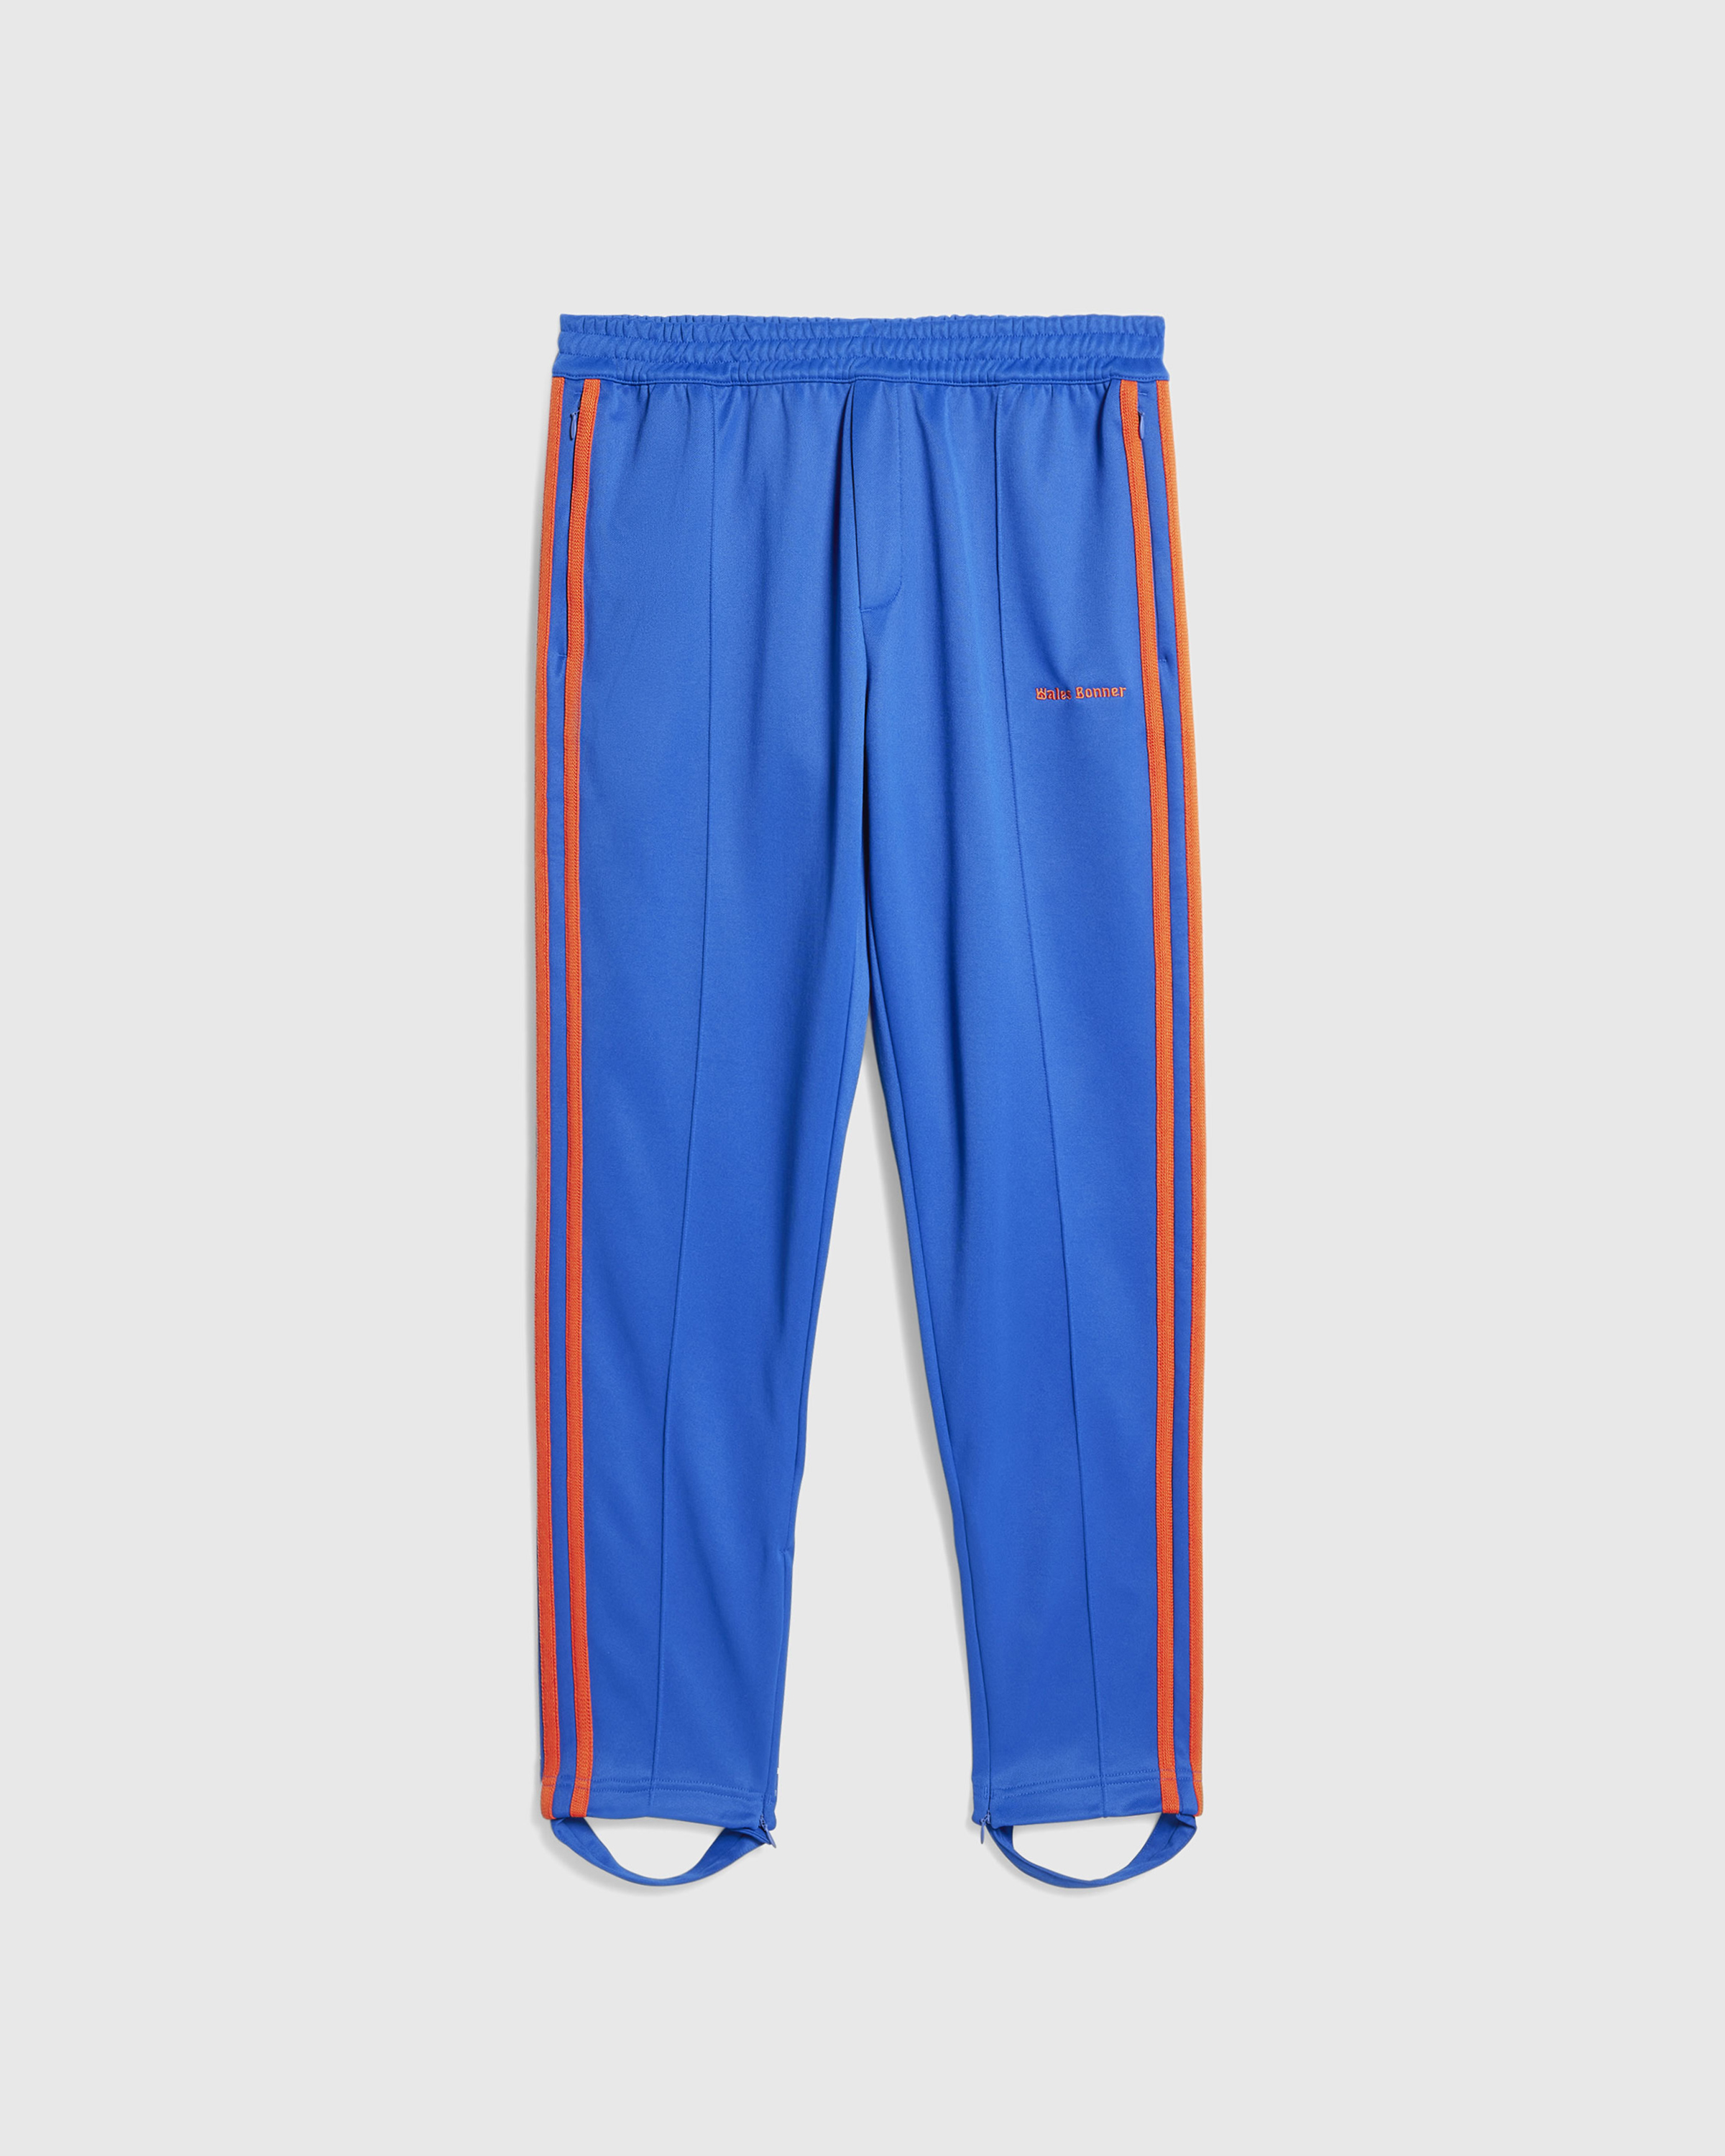 Adidas x Wales Bonner – Stirrup Pants Team Royal Blue - Track Pants - Blue - Image 1